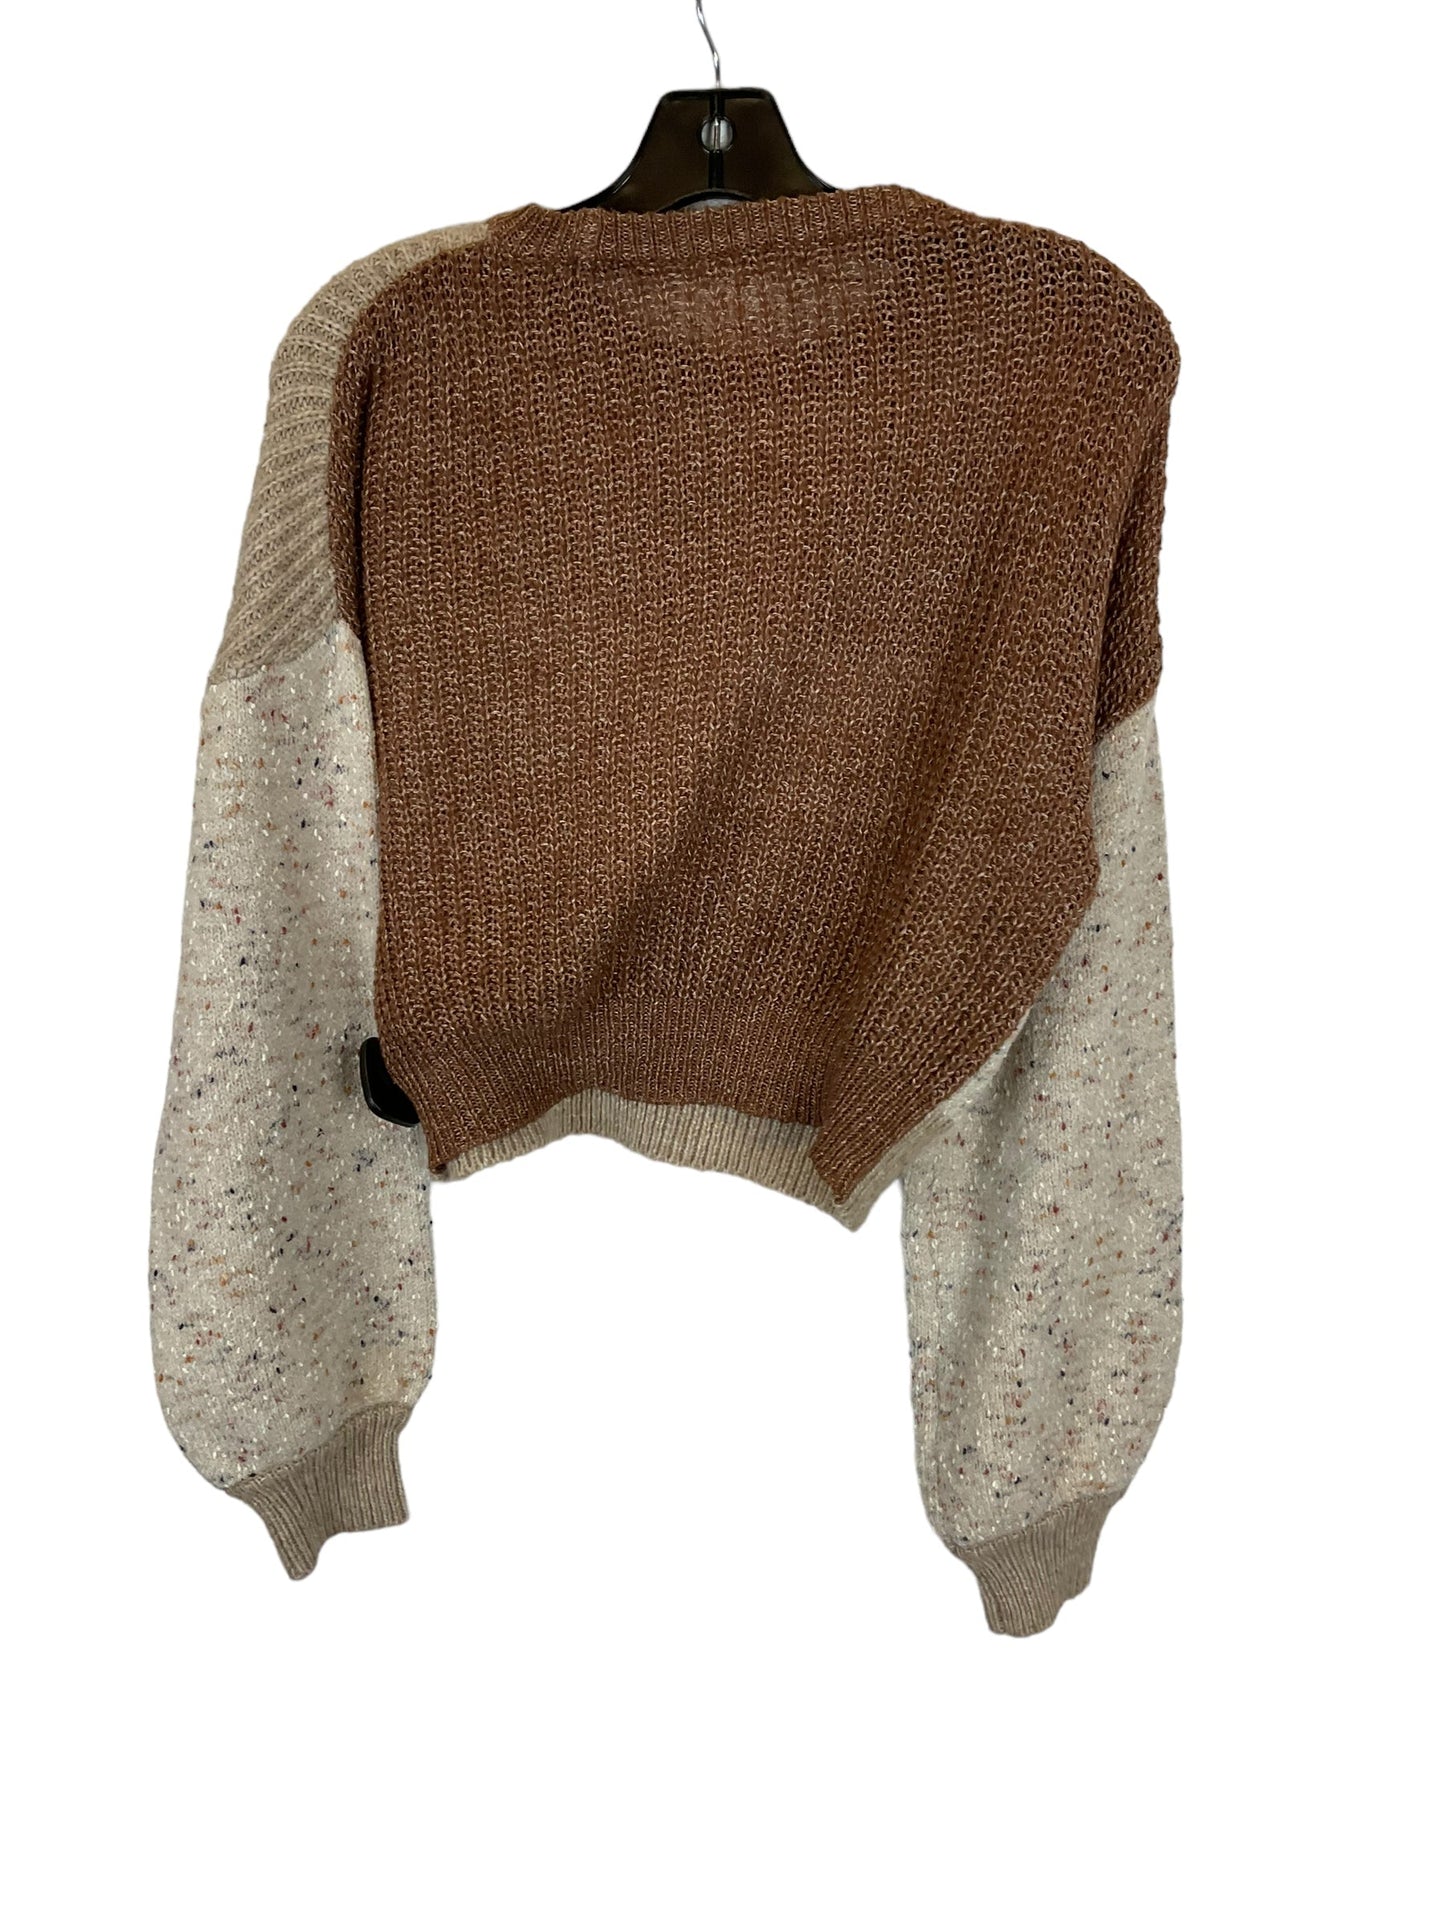 Sweater By Bb Dakota  Size: Xs